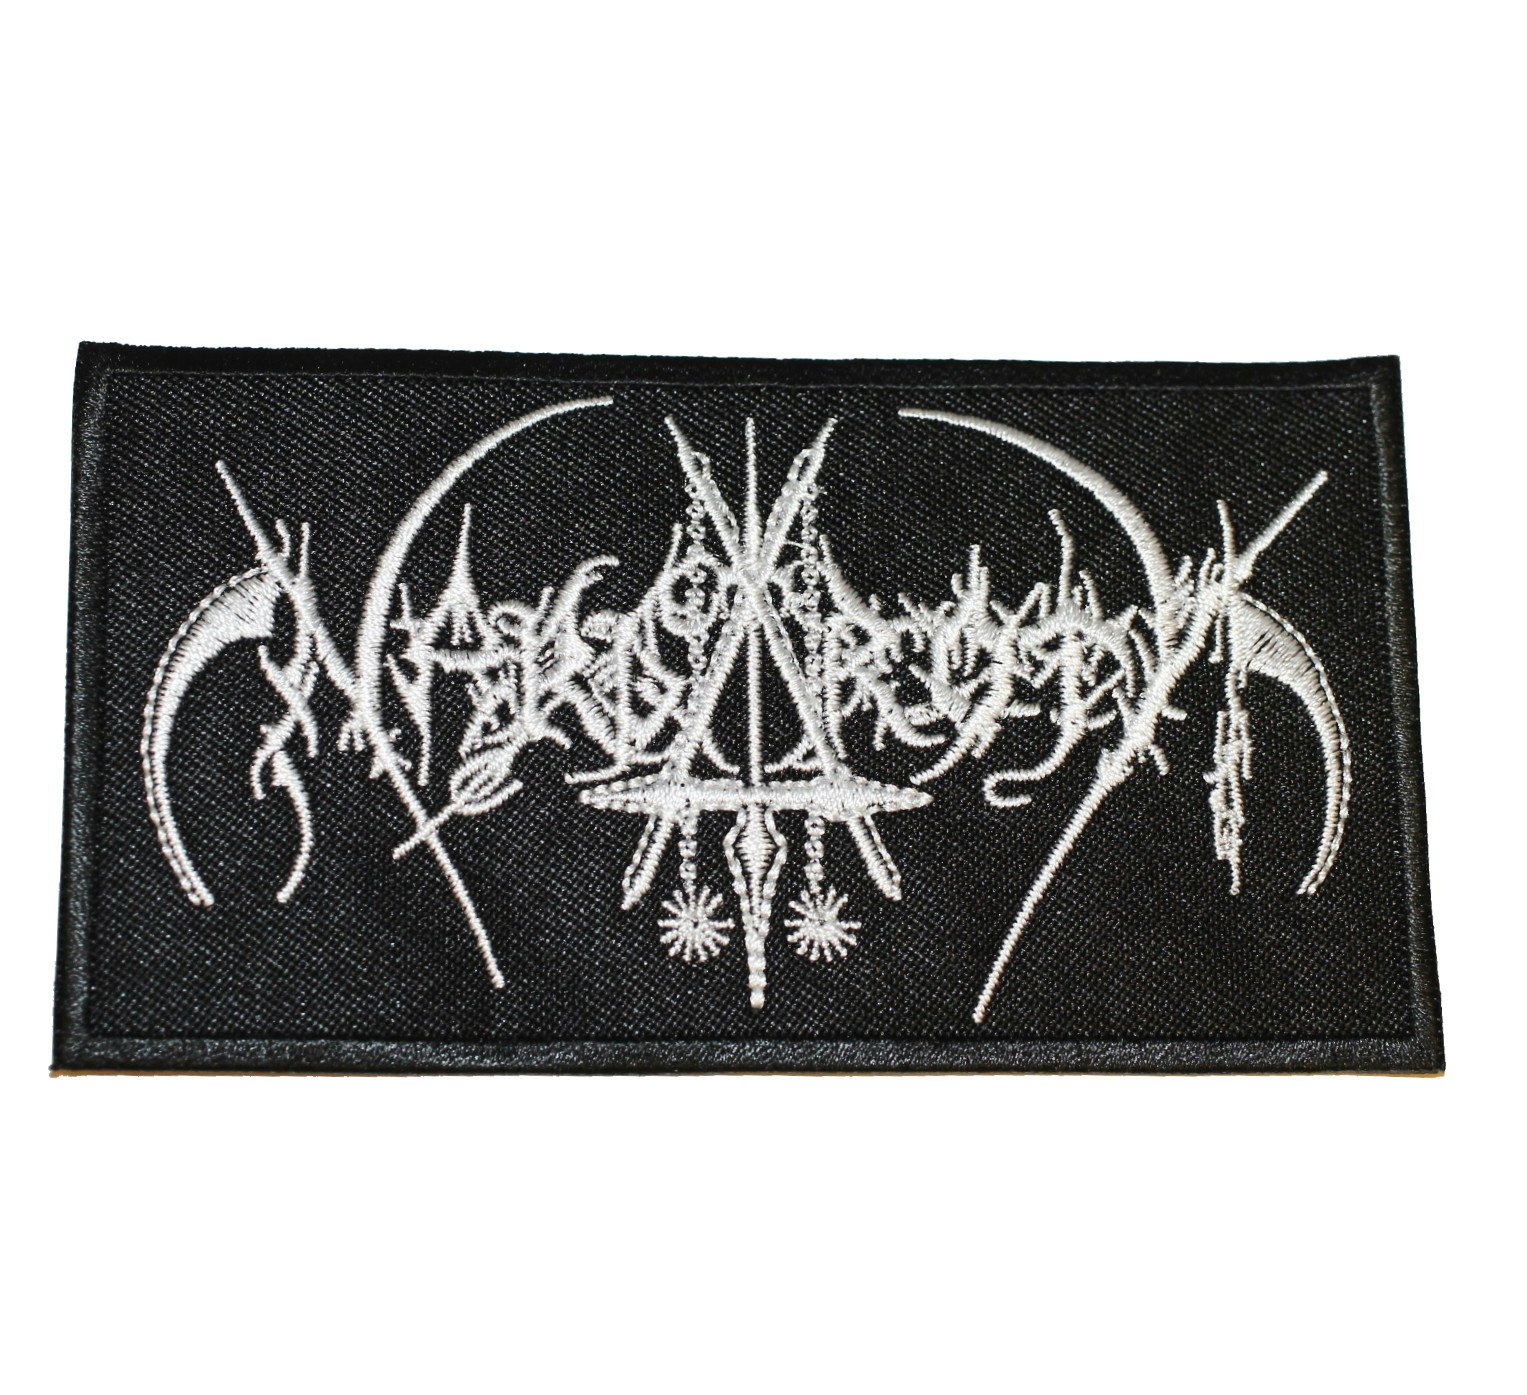 Nargaroth logo patch